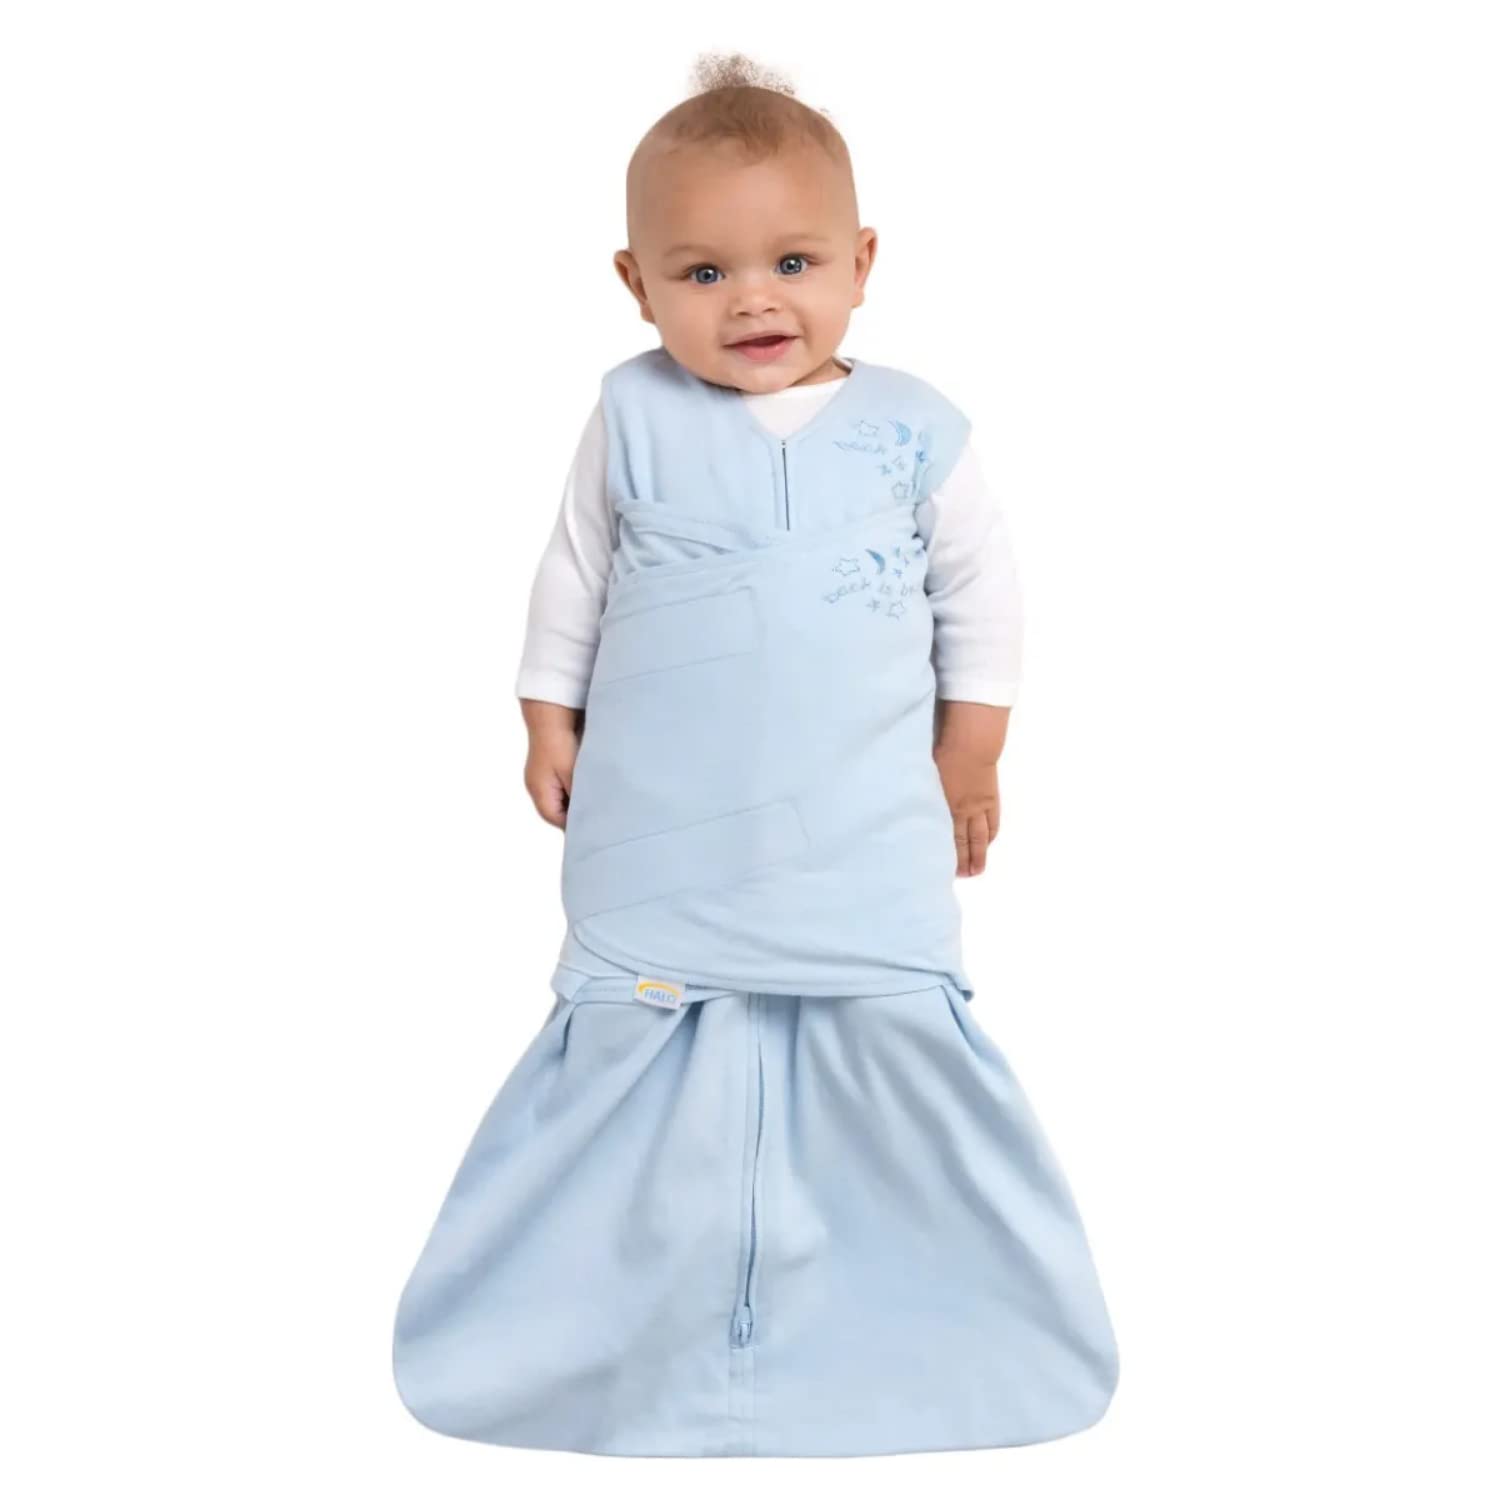 HALO 100% Cotton Sleepsack Swaddle, 3-Way Adjustable Wearable Blanket, TOG 1.5, Baby Blue, Newborn, 0-3 Months